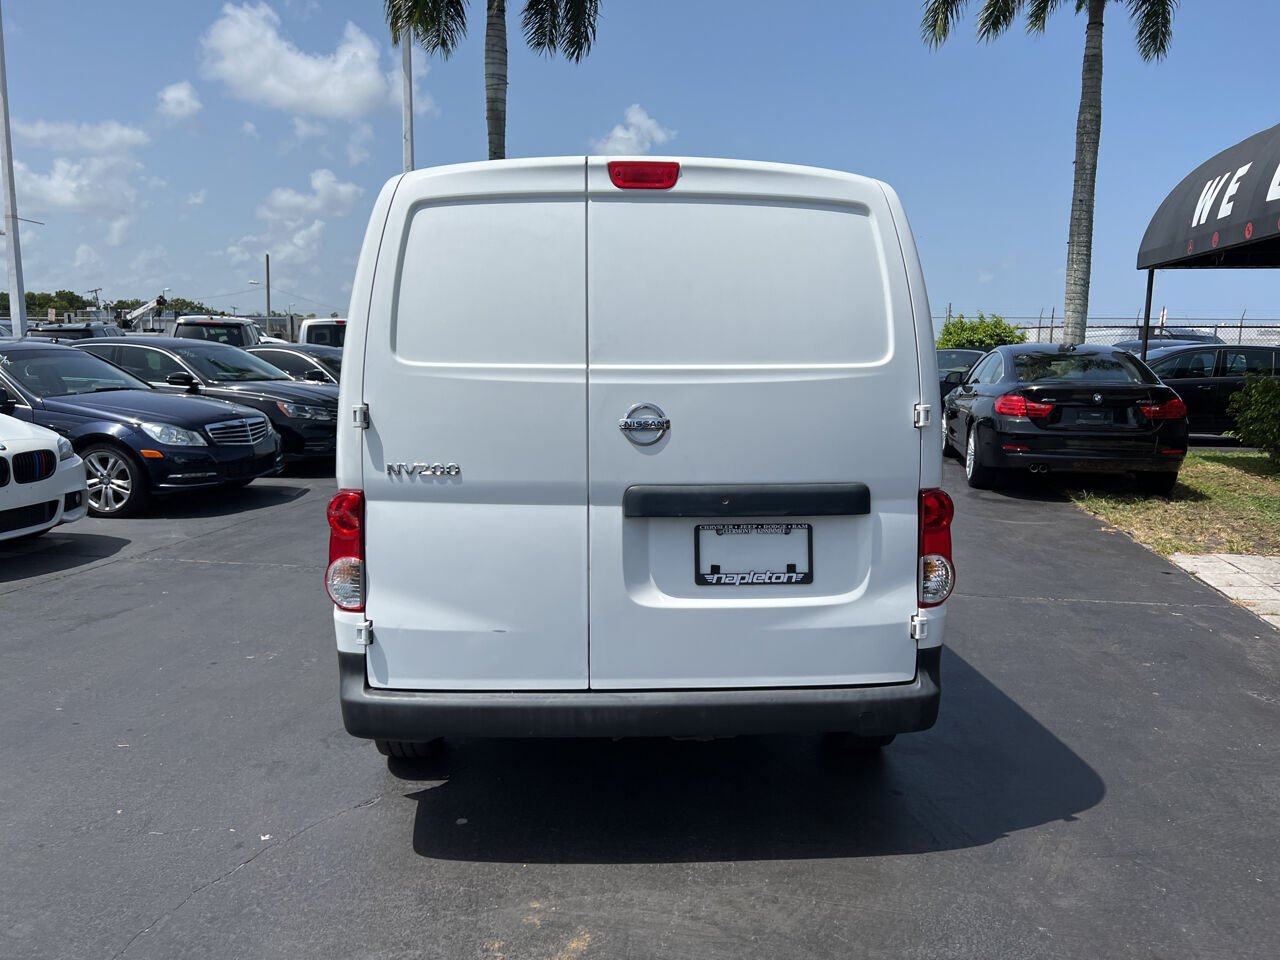 2015 Nissan NV200 Van - $16,900